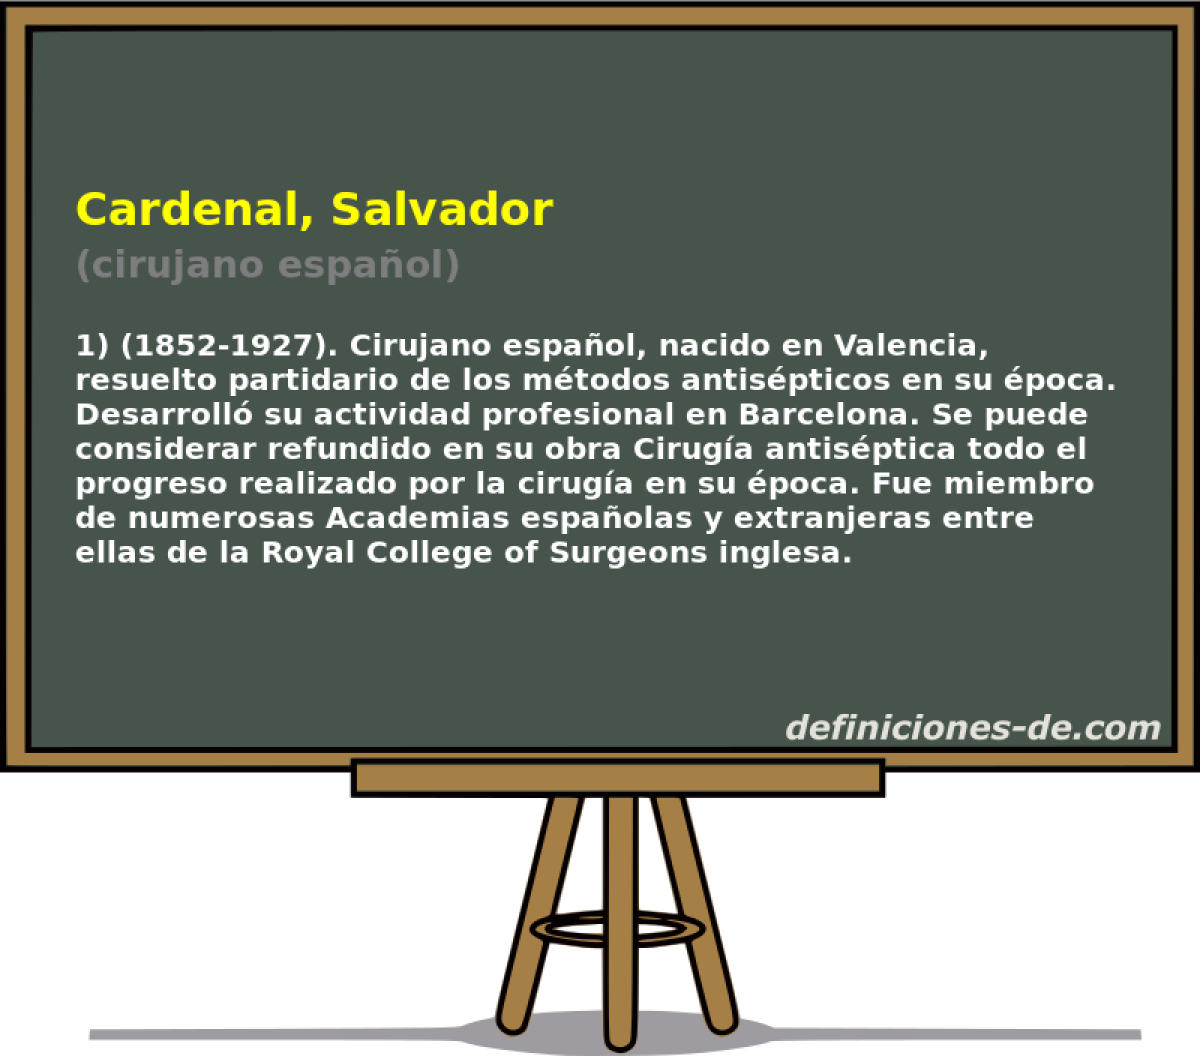 Cardenal, Salvador (cirujano espaol)